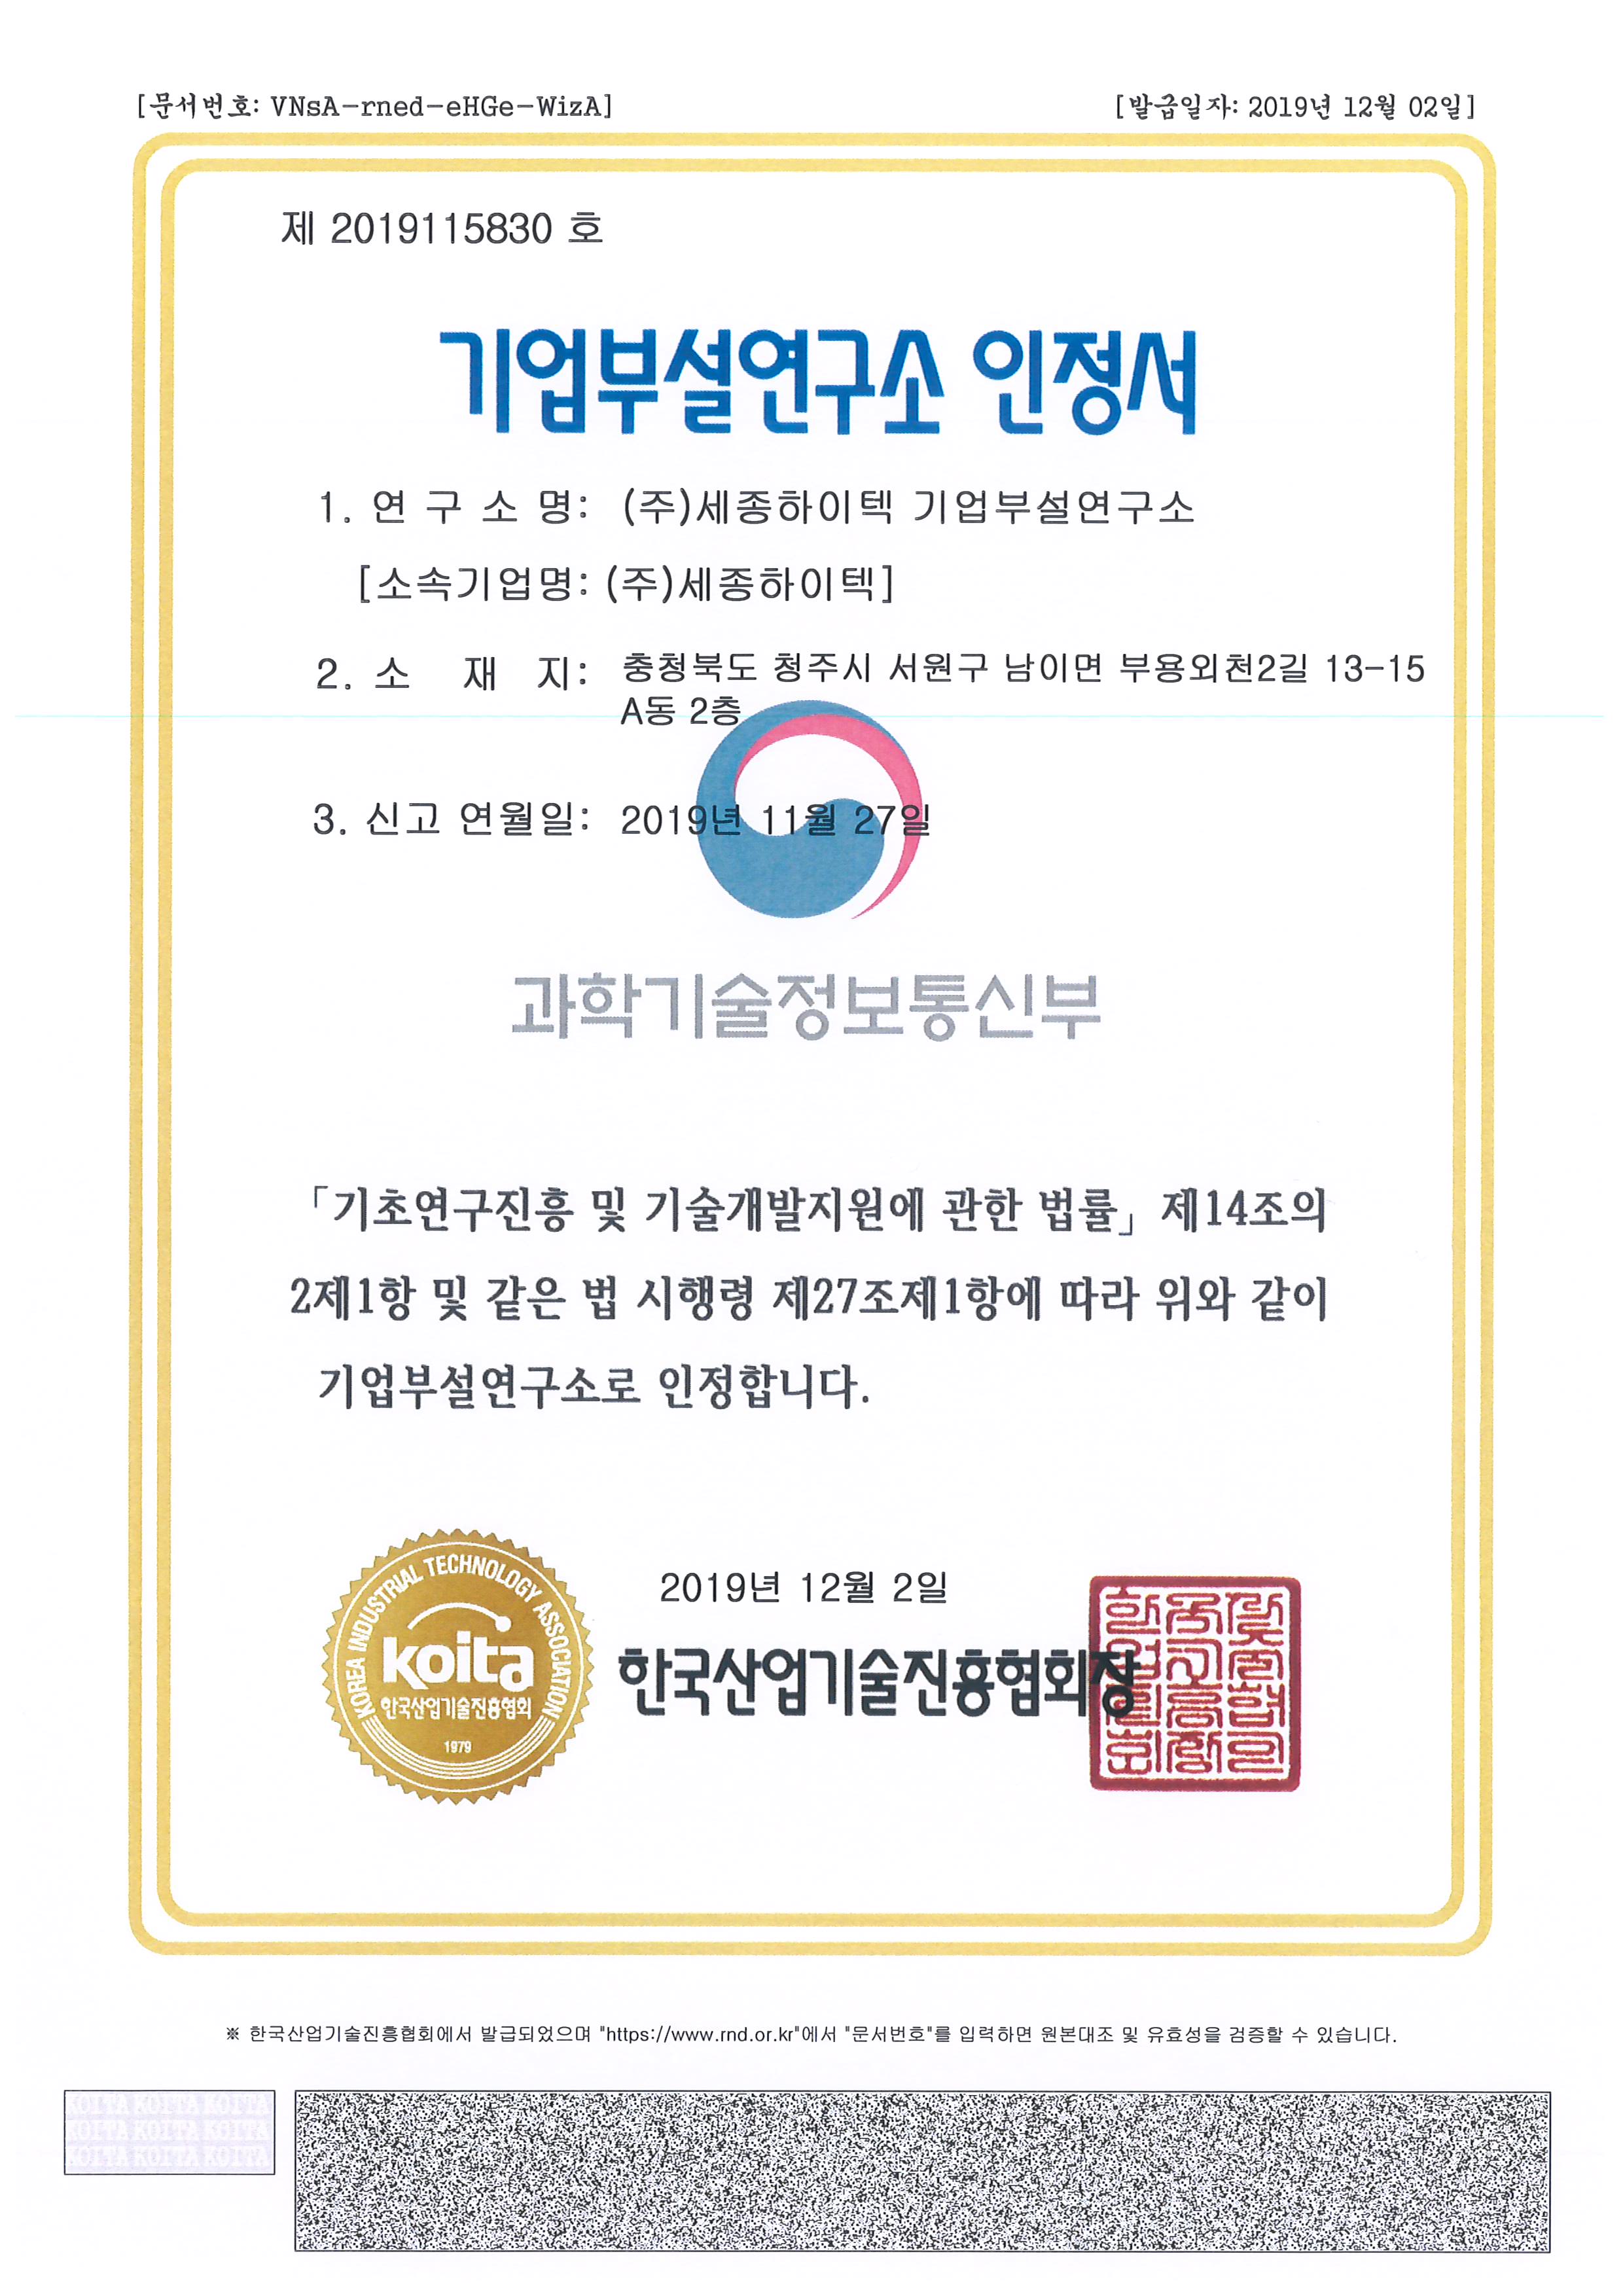 Certification-Certificate of company research institute